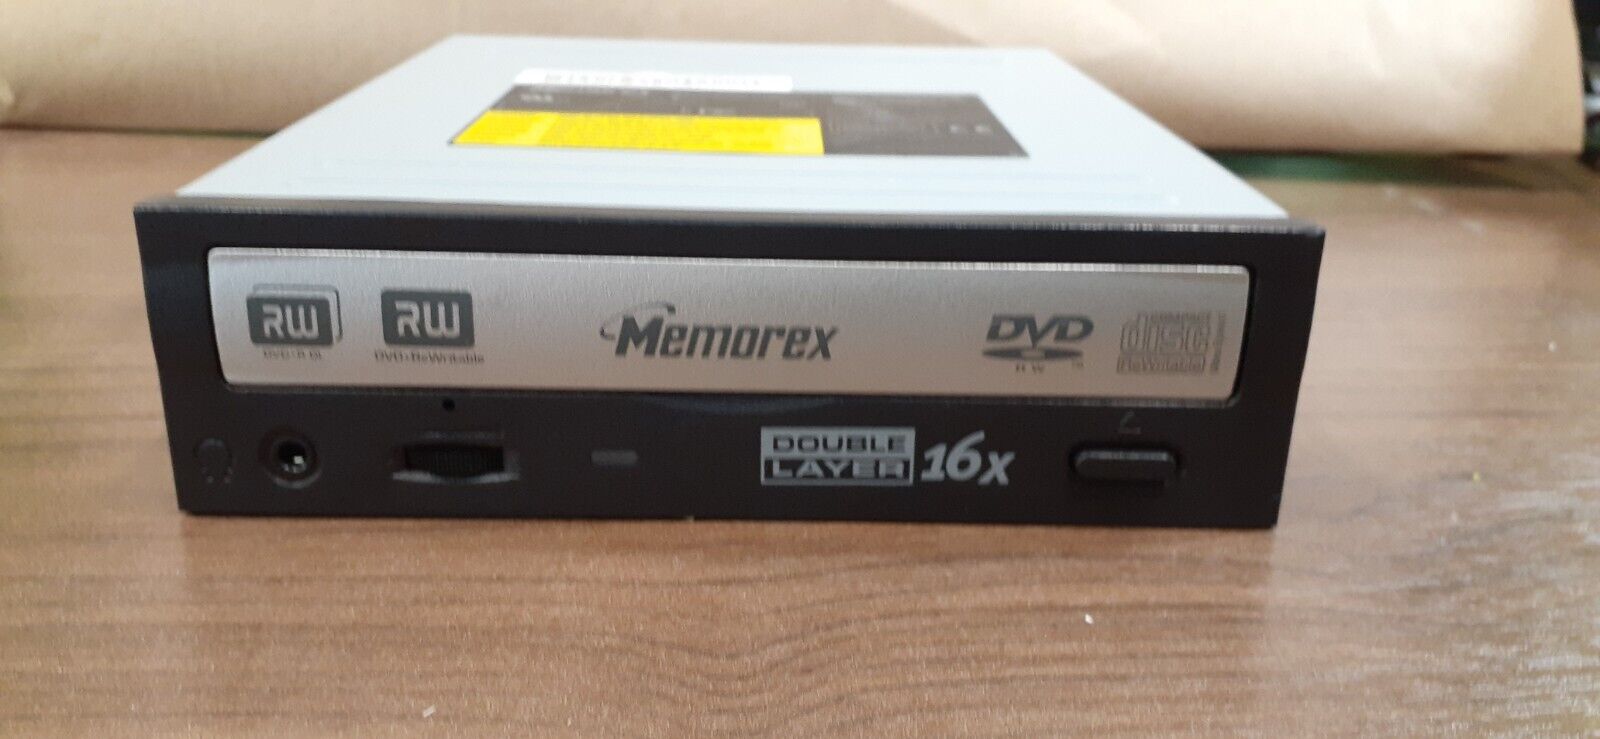 MEMOREX DVD RECORDER NERO 6 DUAL FORMAT DOUBLE LAYER EXTERNAL USB 8.5GB